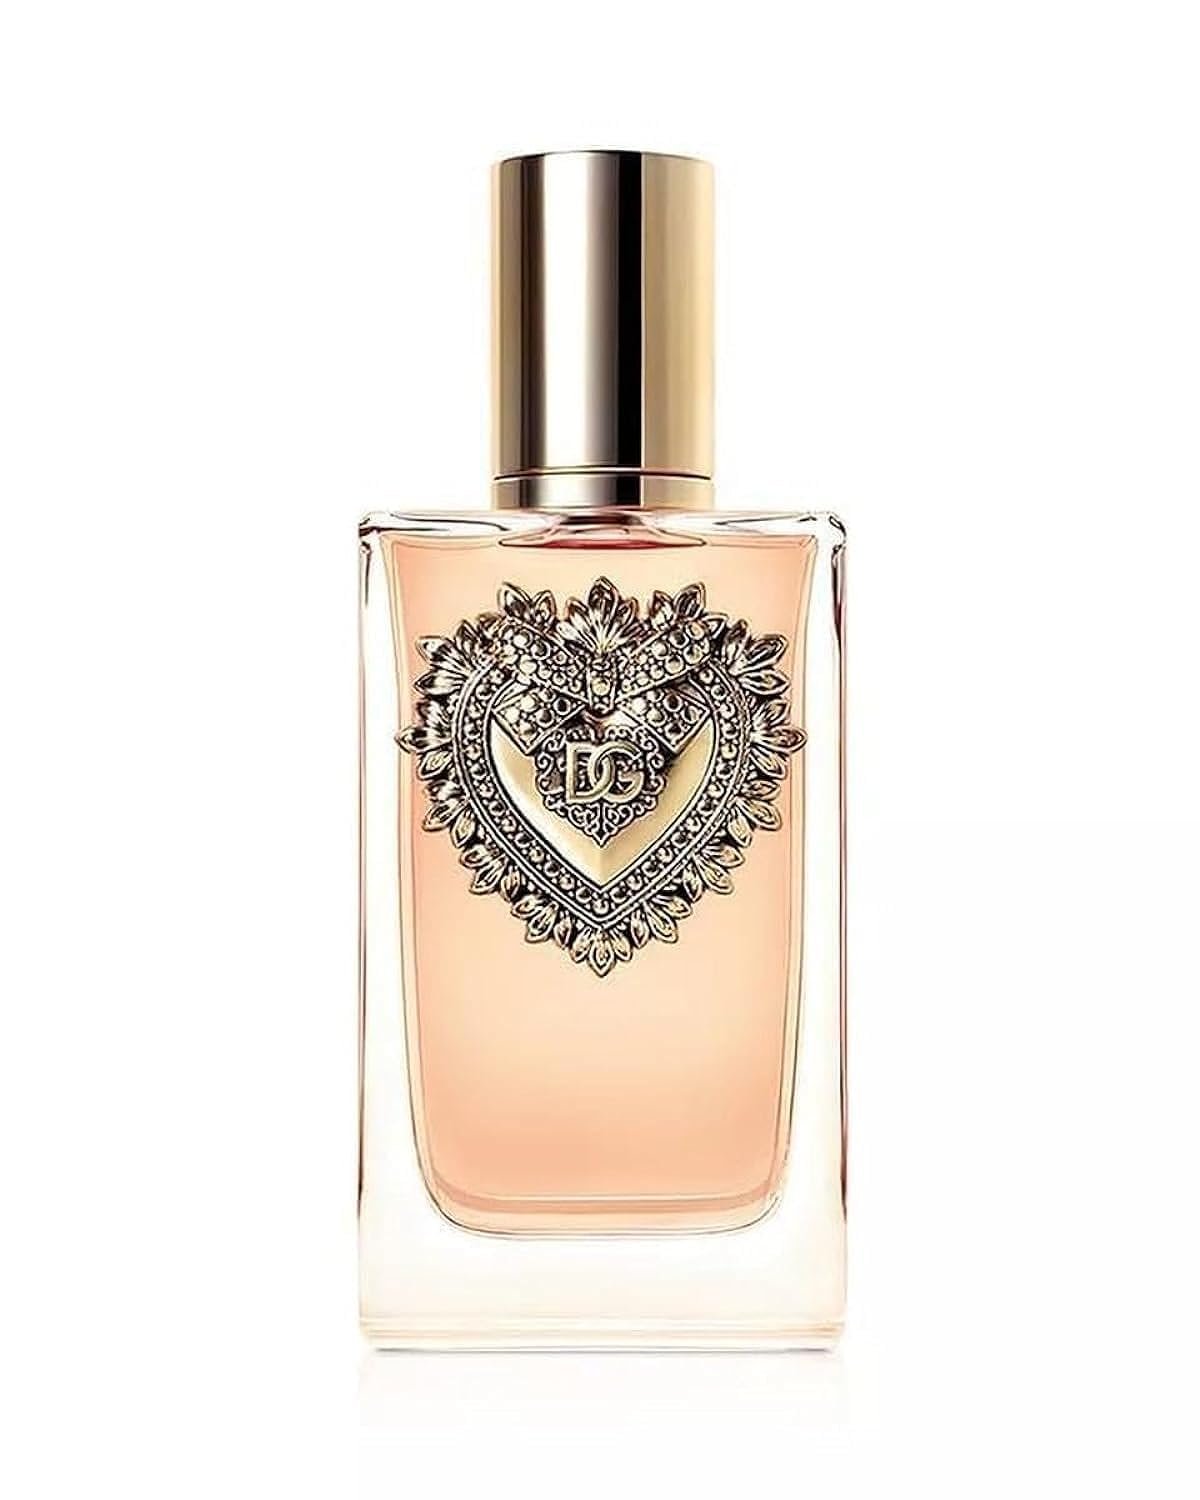 perfume mujer devotion dolce y gabanna edp 100ml frasco